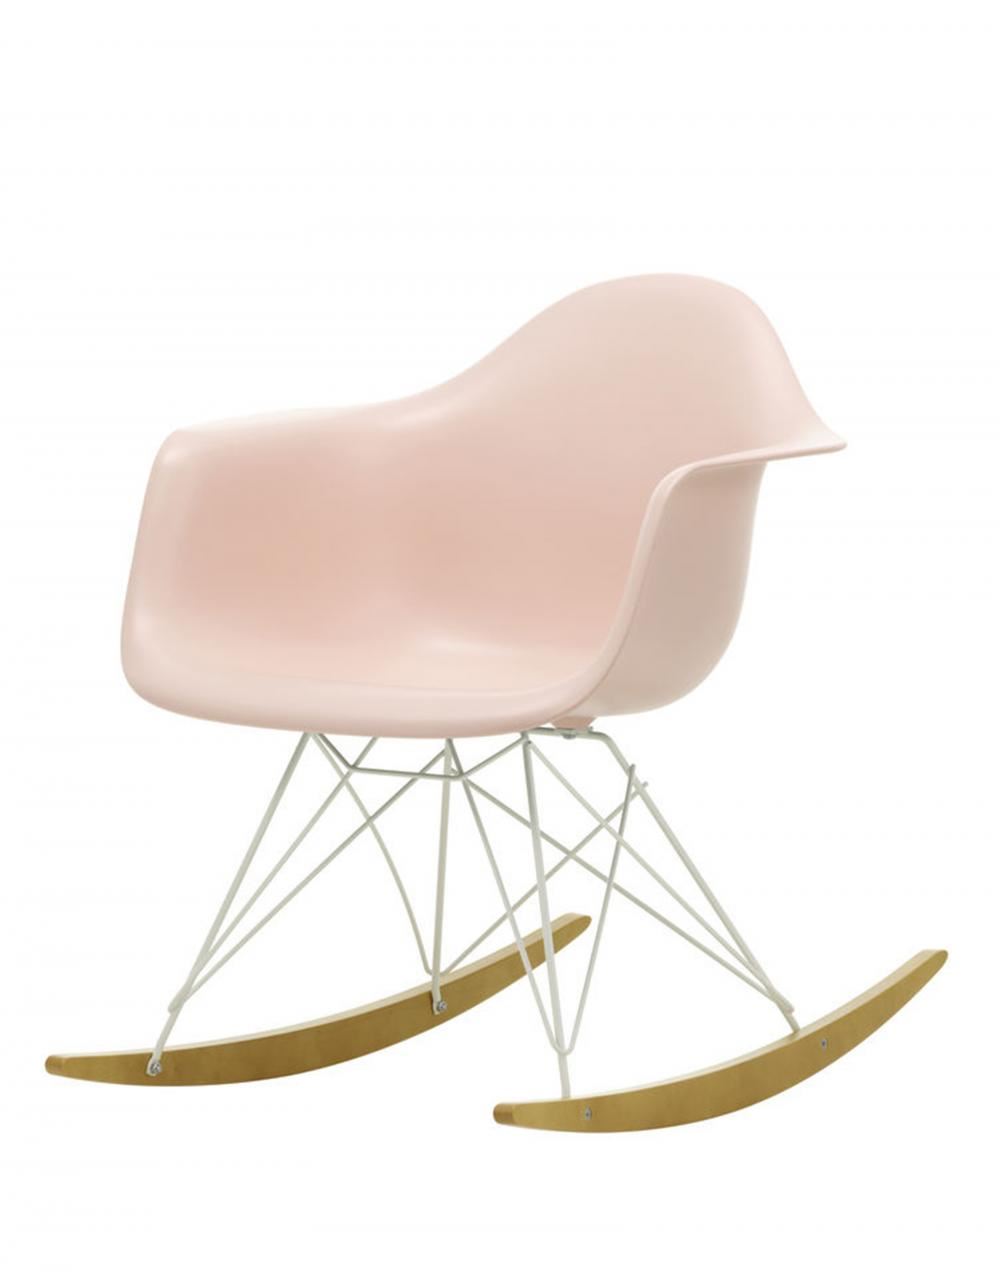 Eames Rar Plastic Rocking Chair White Base Pale Rose Golden Maple